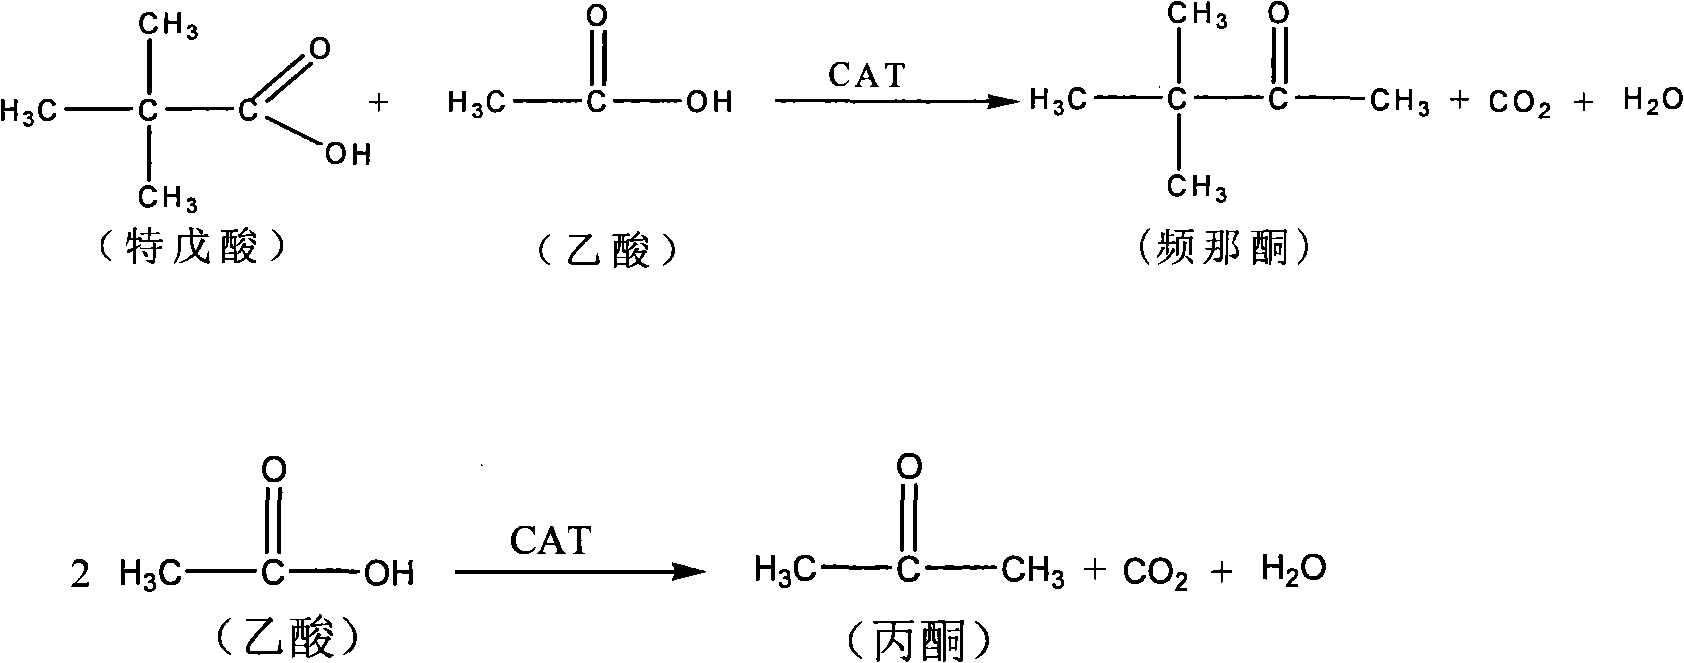 Process for synthesizing 3,3-dimethyl-2-butanone